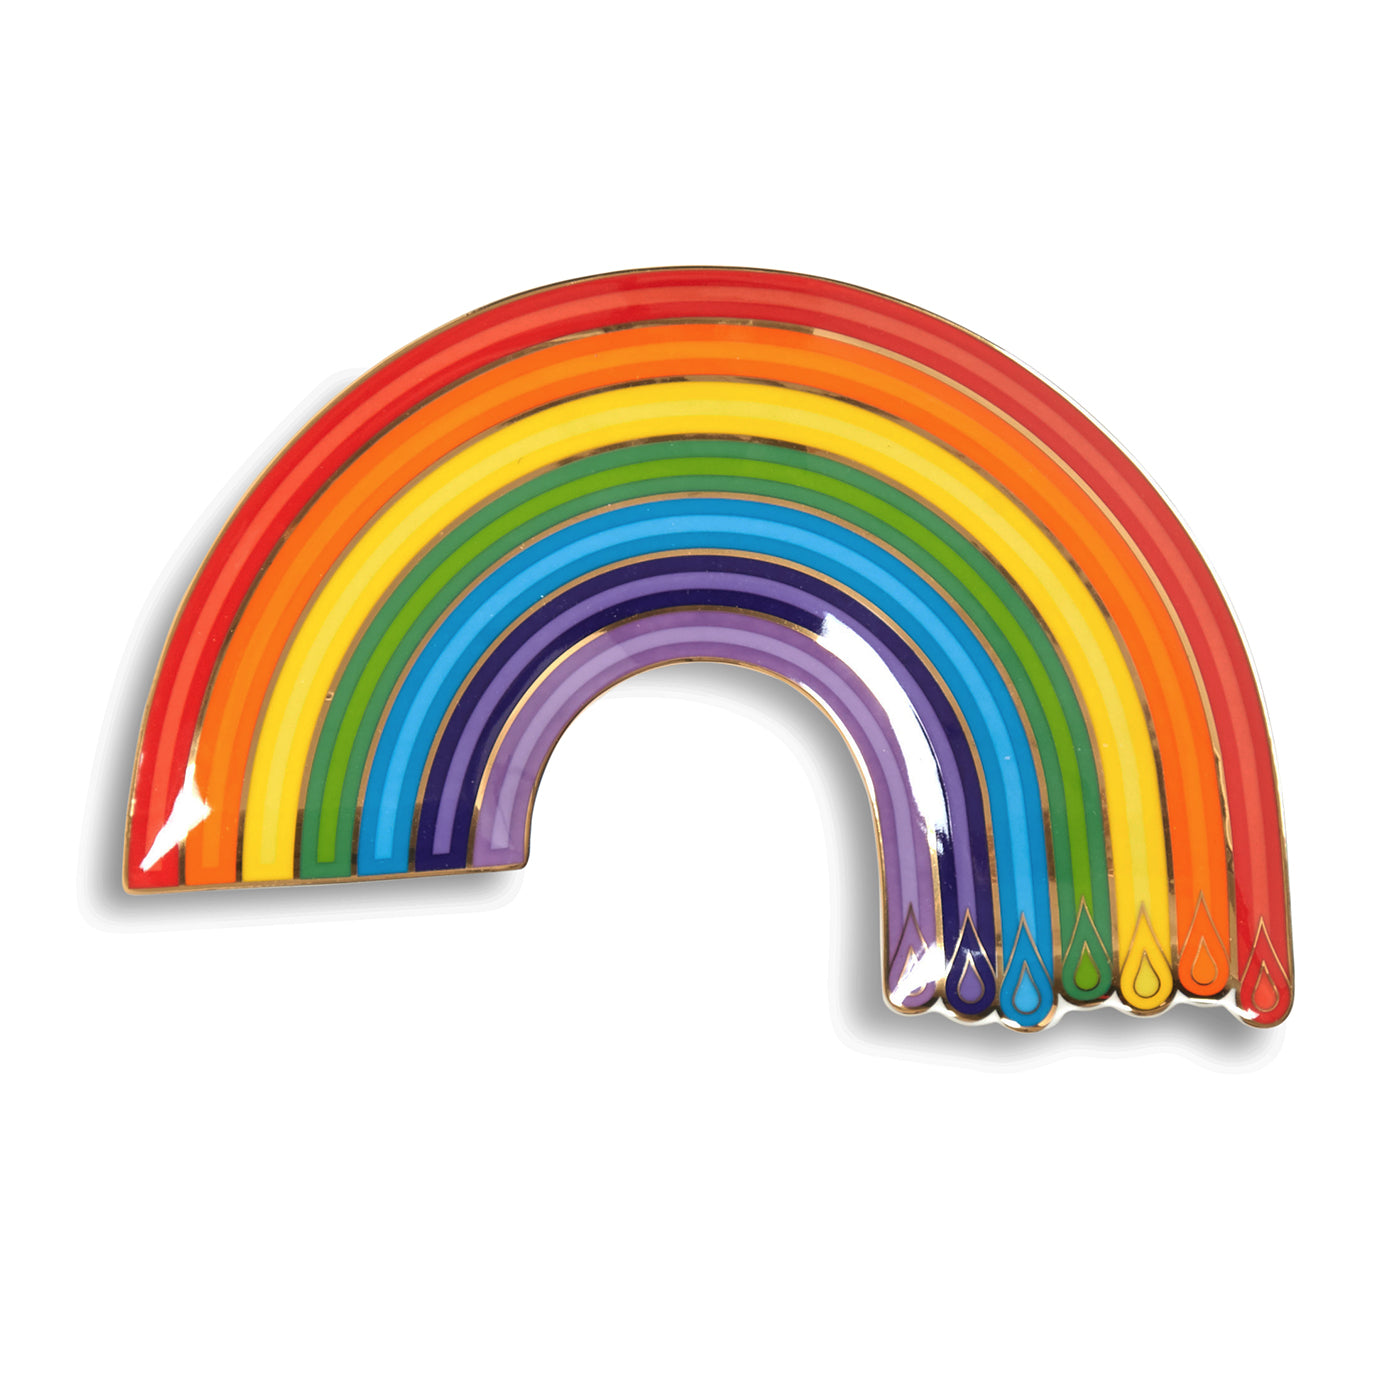 Dripping Rainbow Trinket Dish by Jonathan Adler